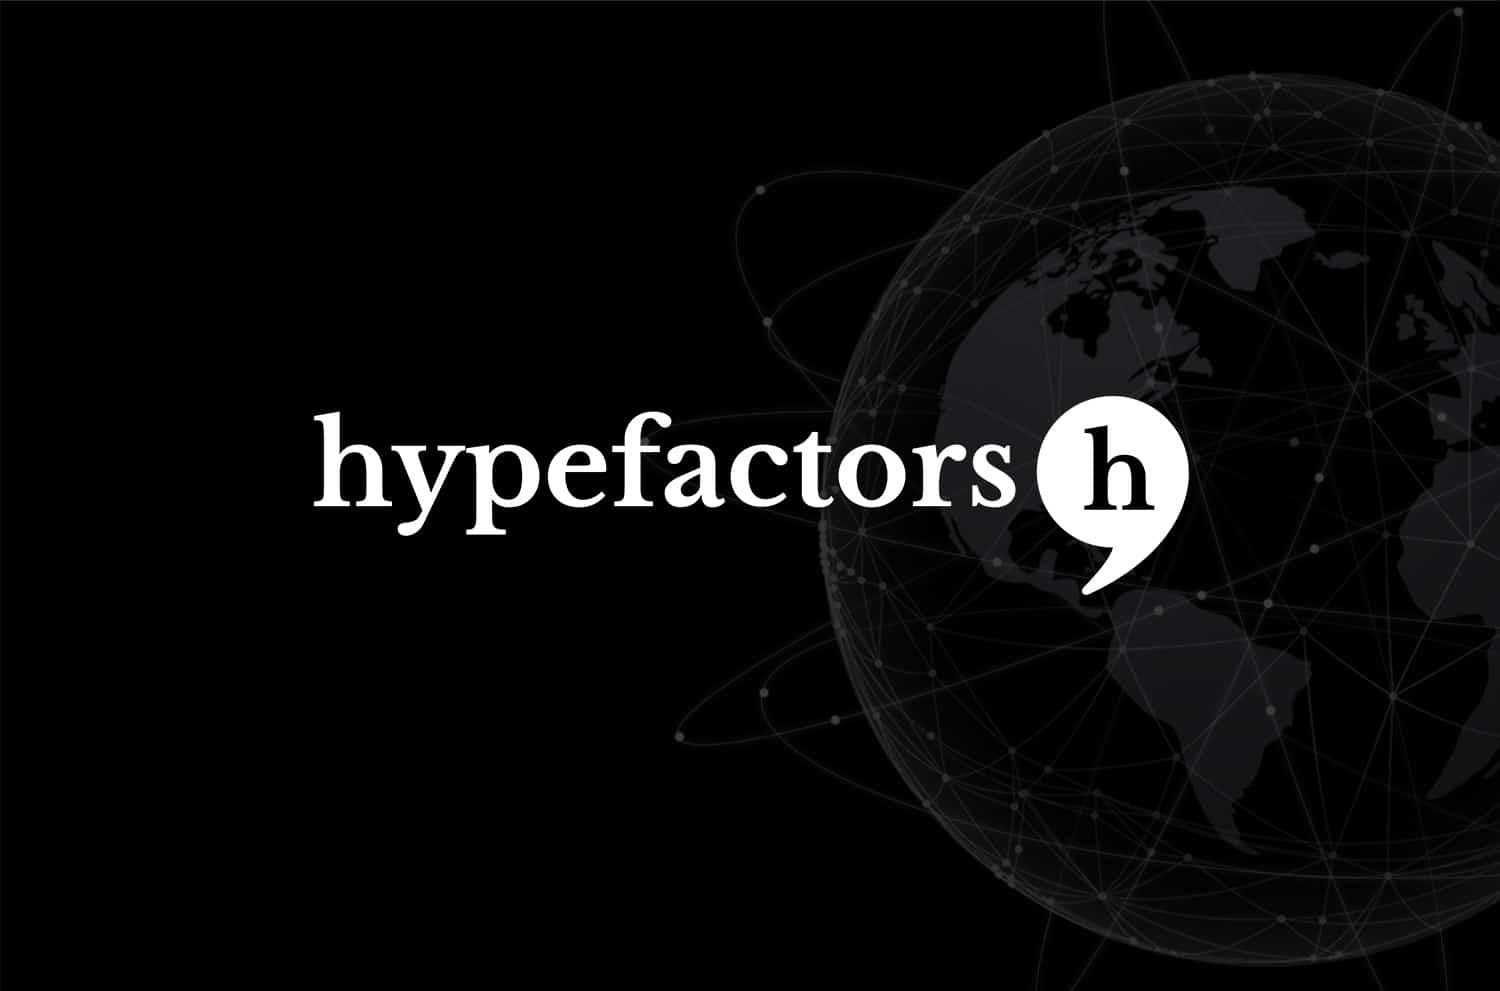 Hypefactors udbygger den kunstige intelligens